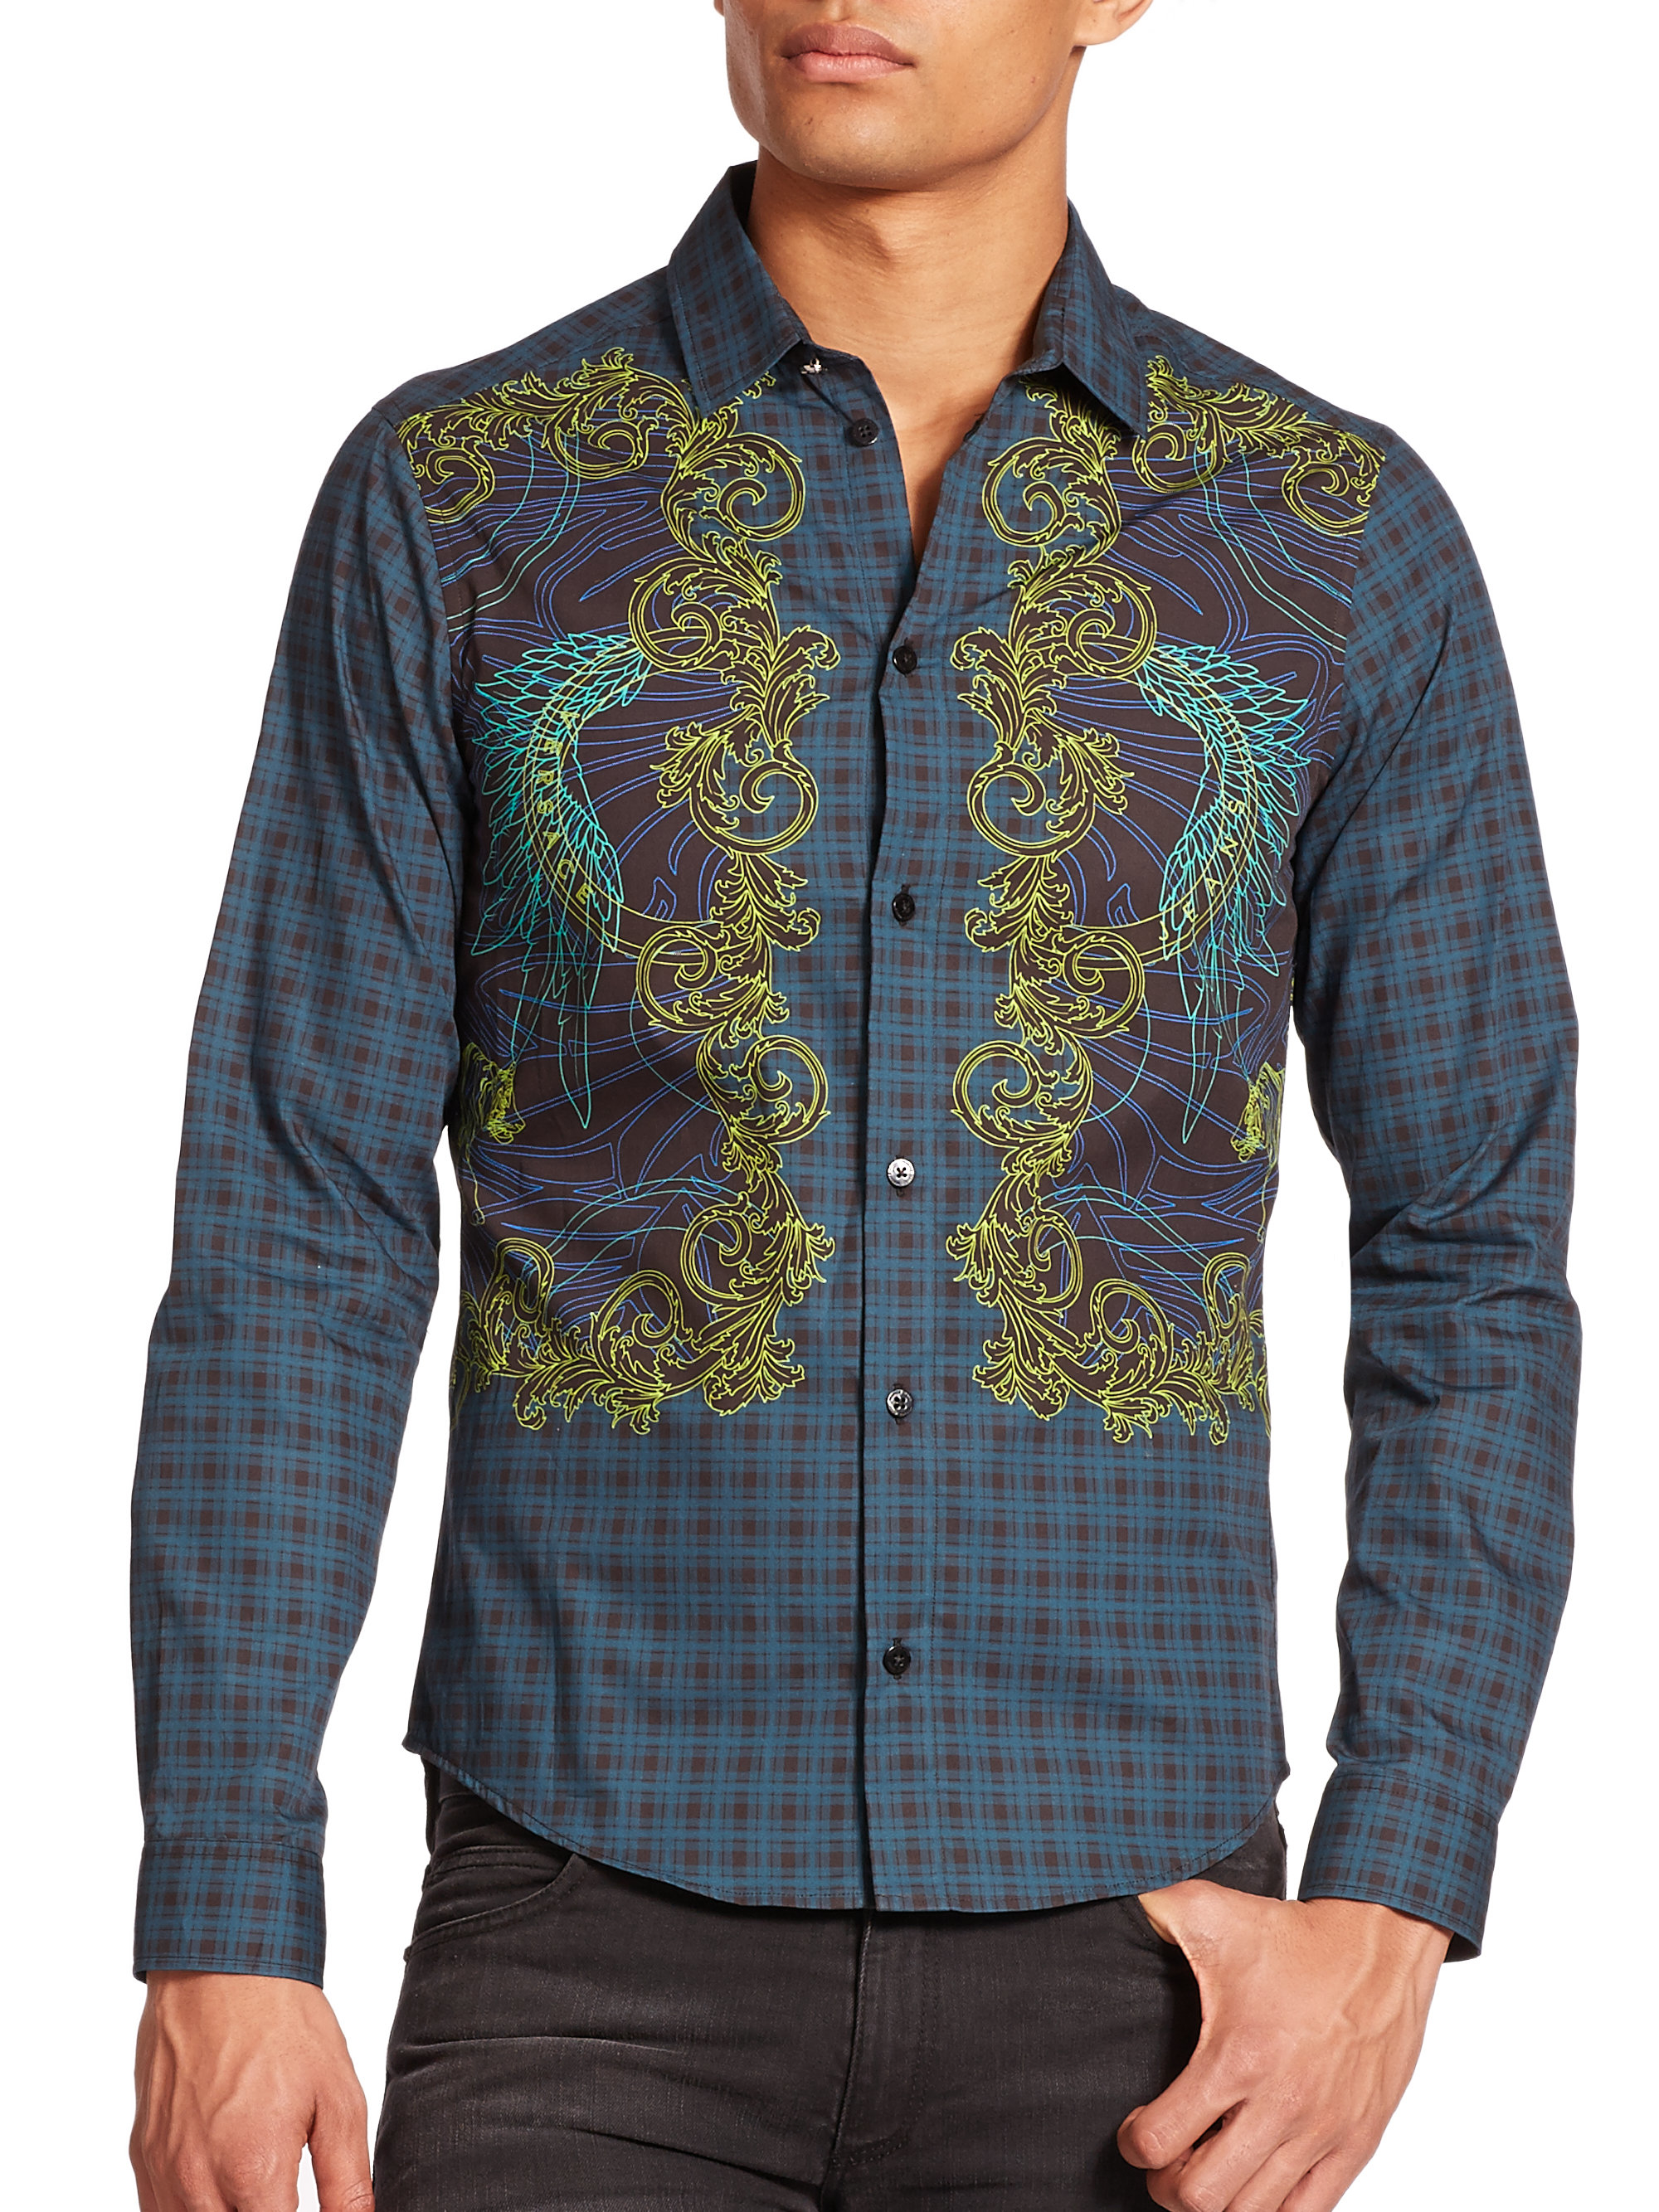 Lyst - Versace Jeans Baroque-print Gingham Sportshirt in Blue for Men